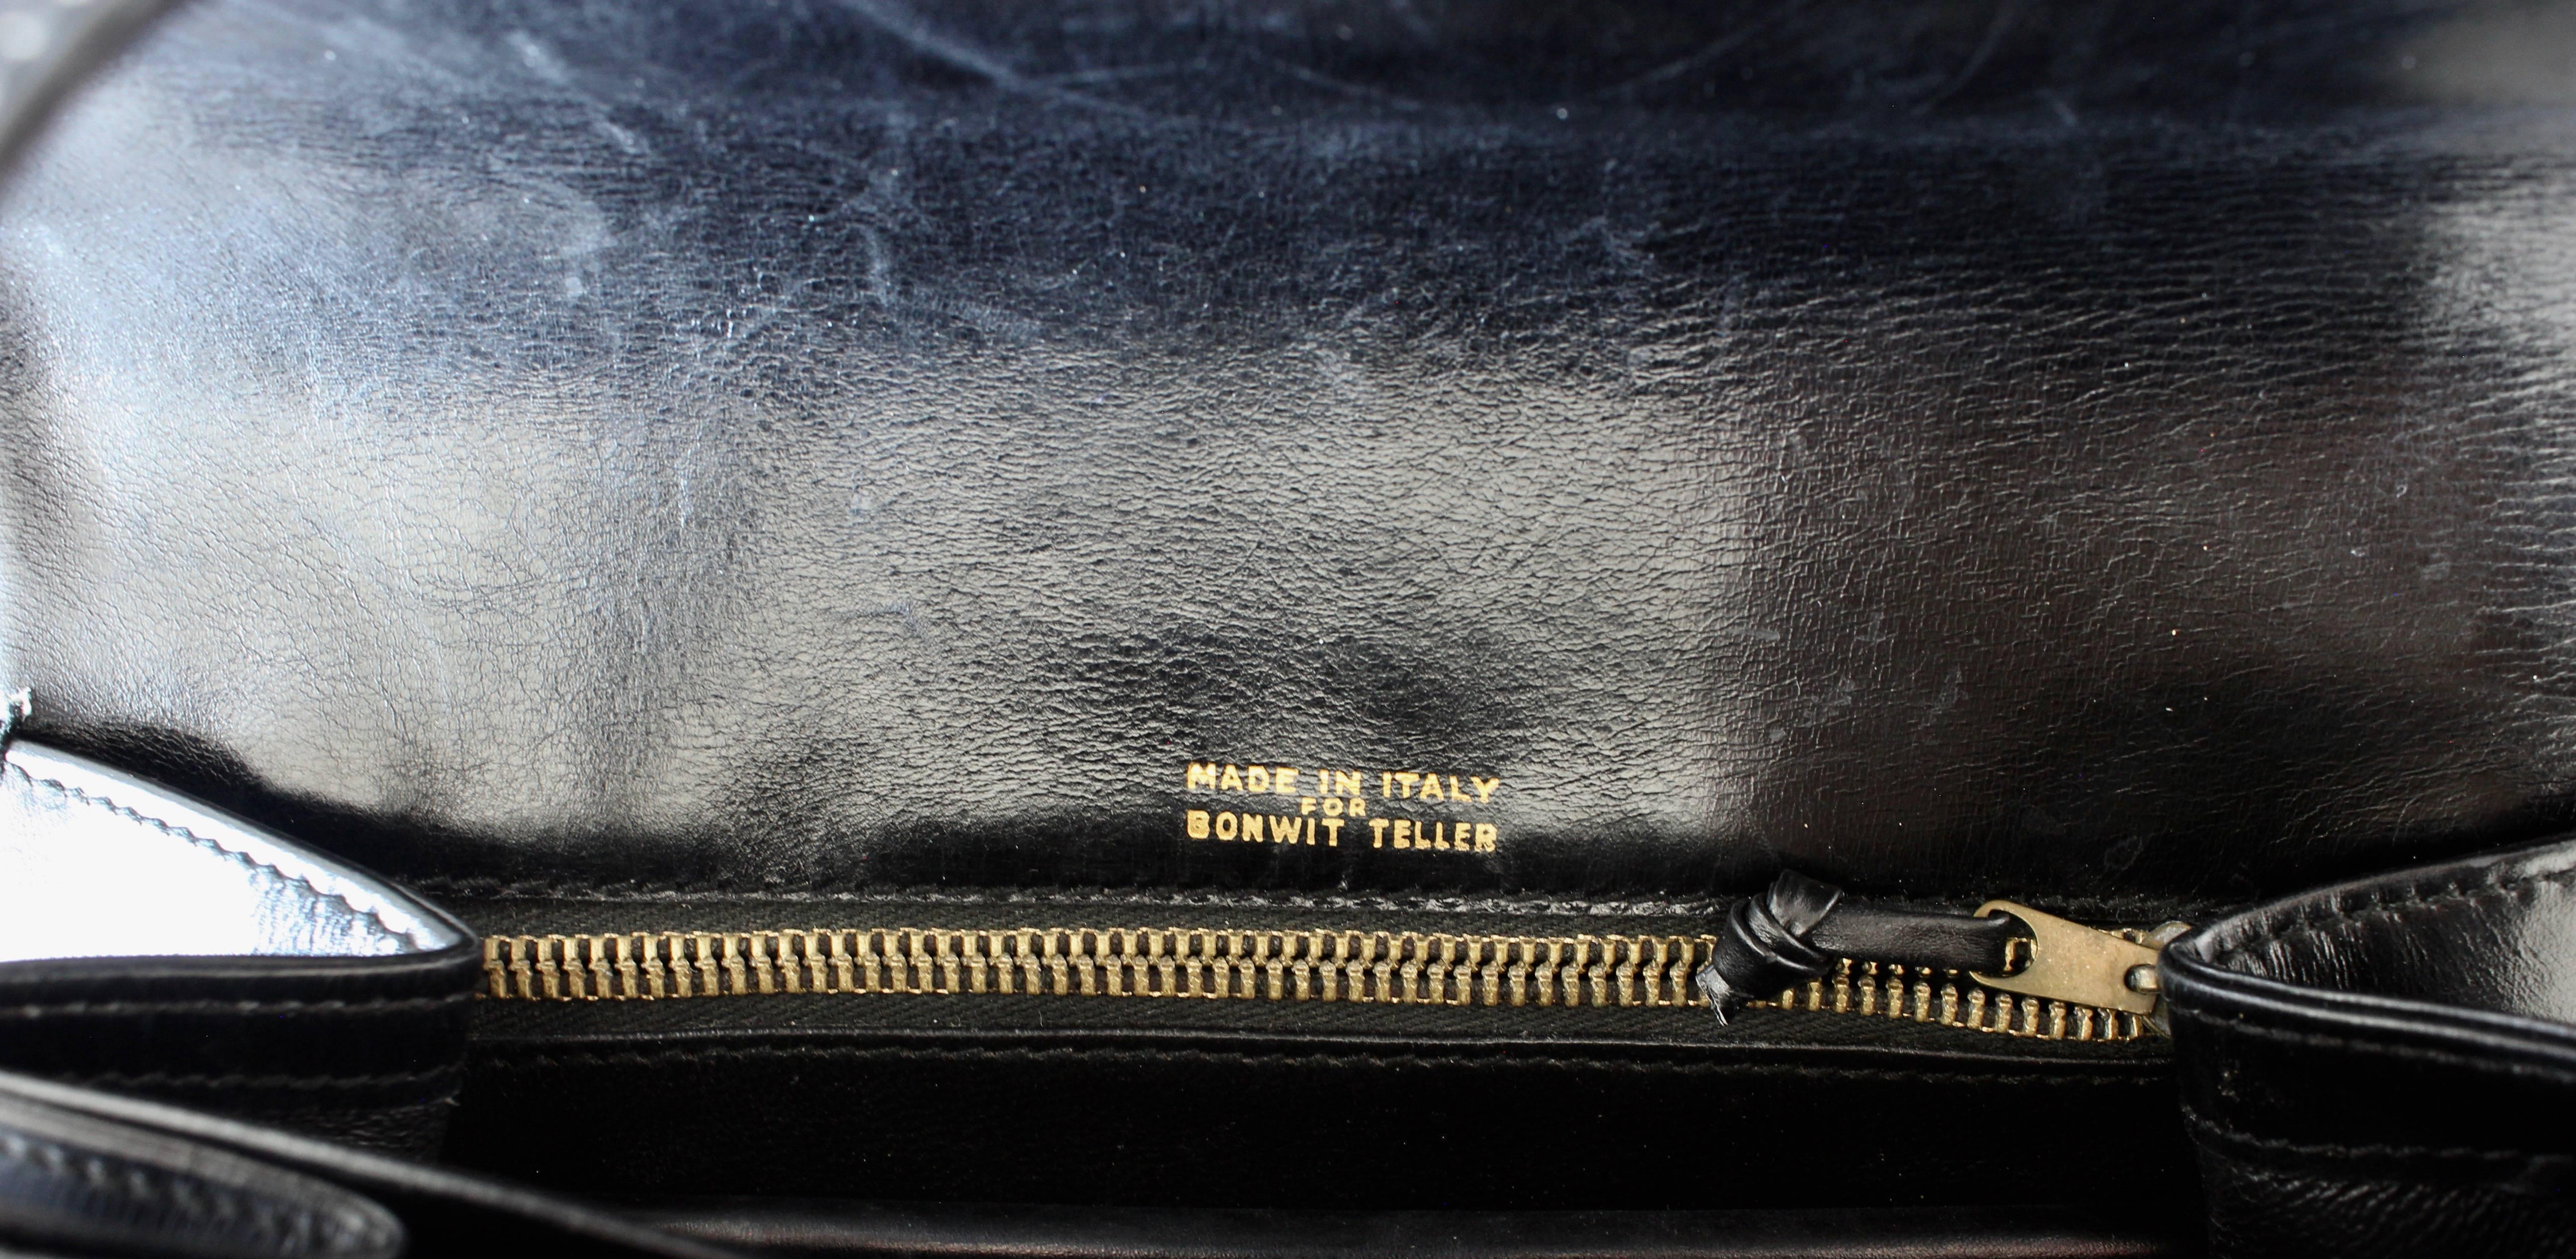 Bonwit Teller Leather Handbag with Bakelite Hardware Vintage 60s Made in Italy 5